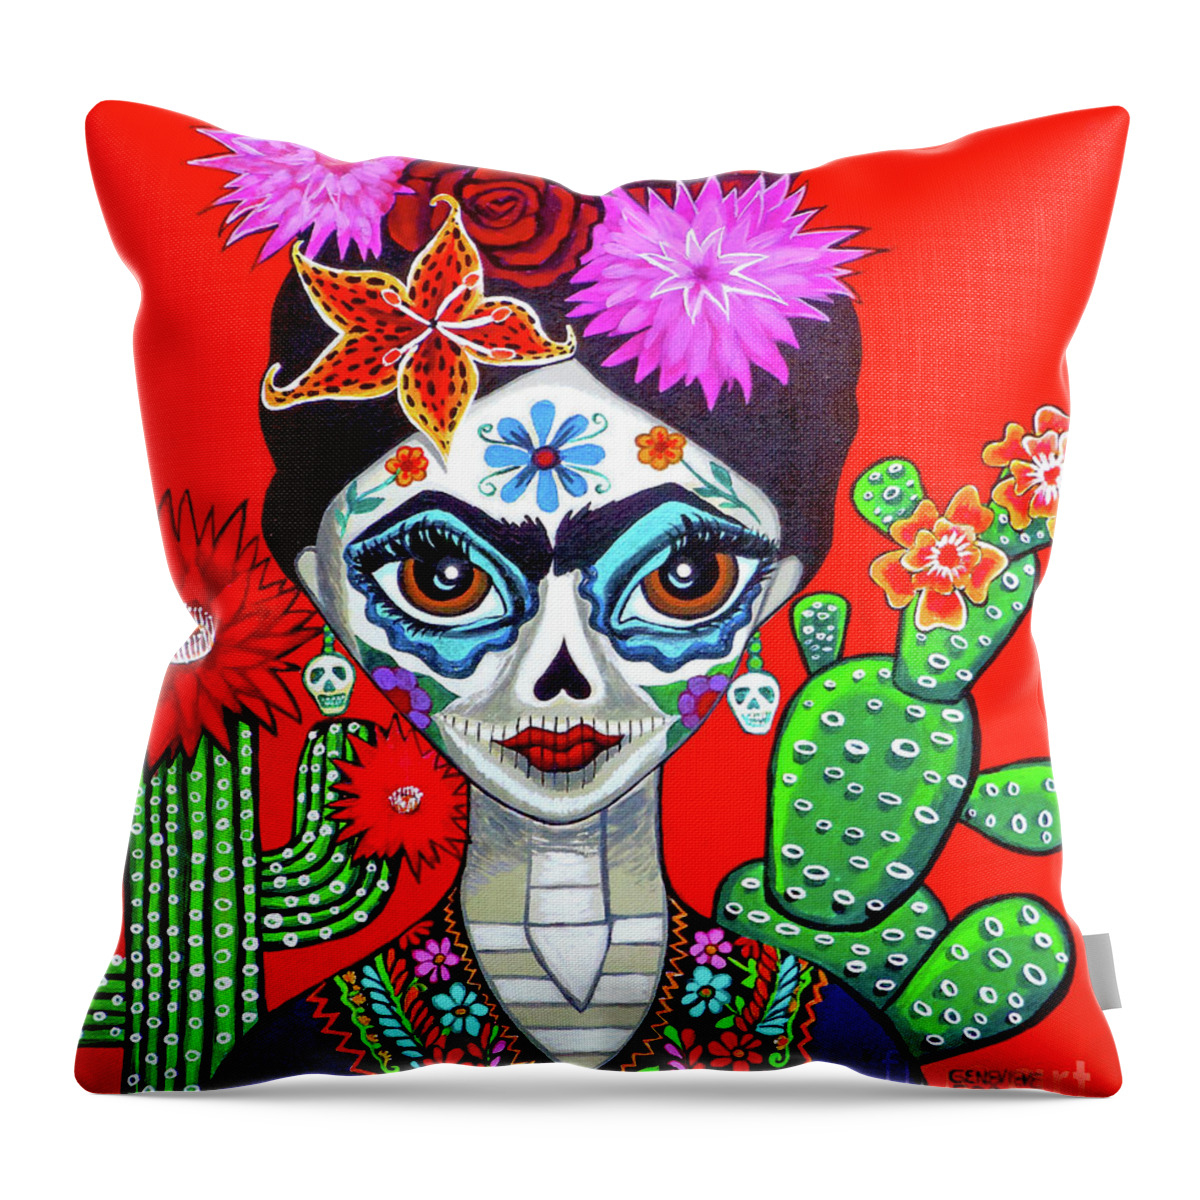 Frida Kahlo Throw Pillow featuring the painting Frida Kahlo Dia De Los Muertos Portrait by Genevieve Esson